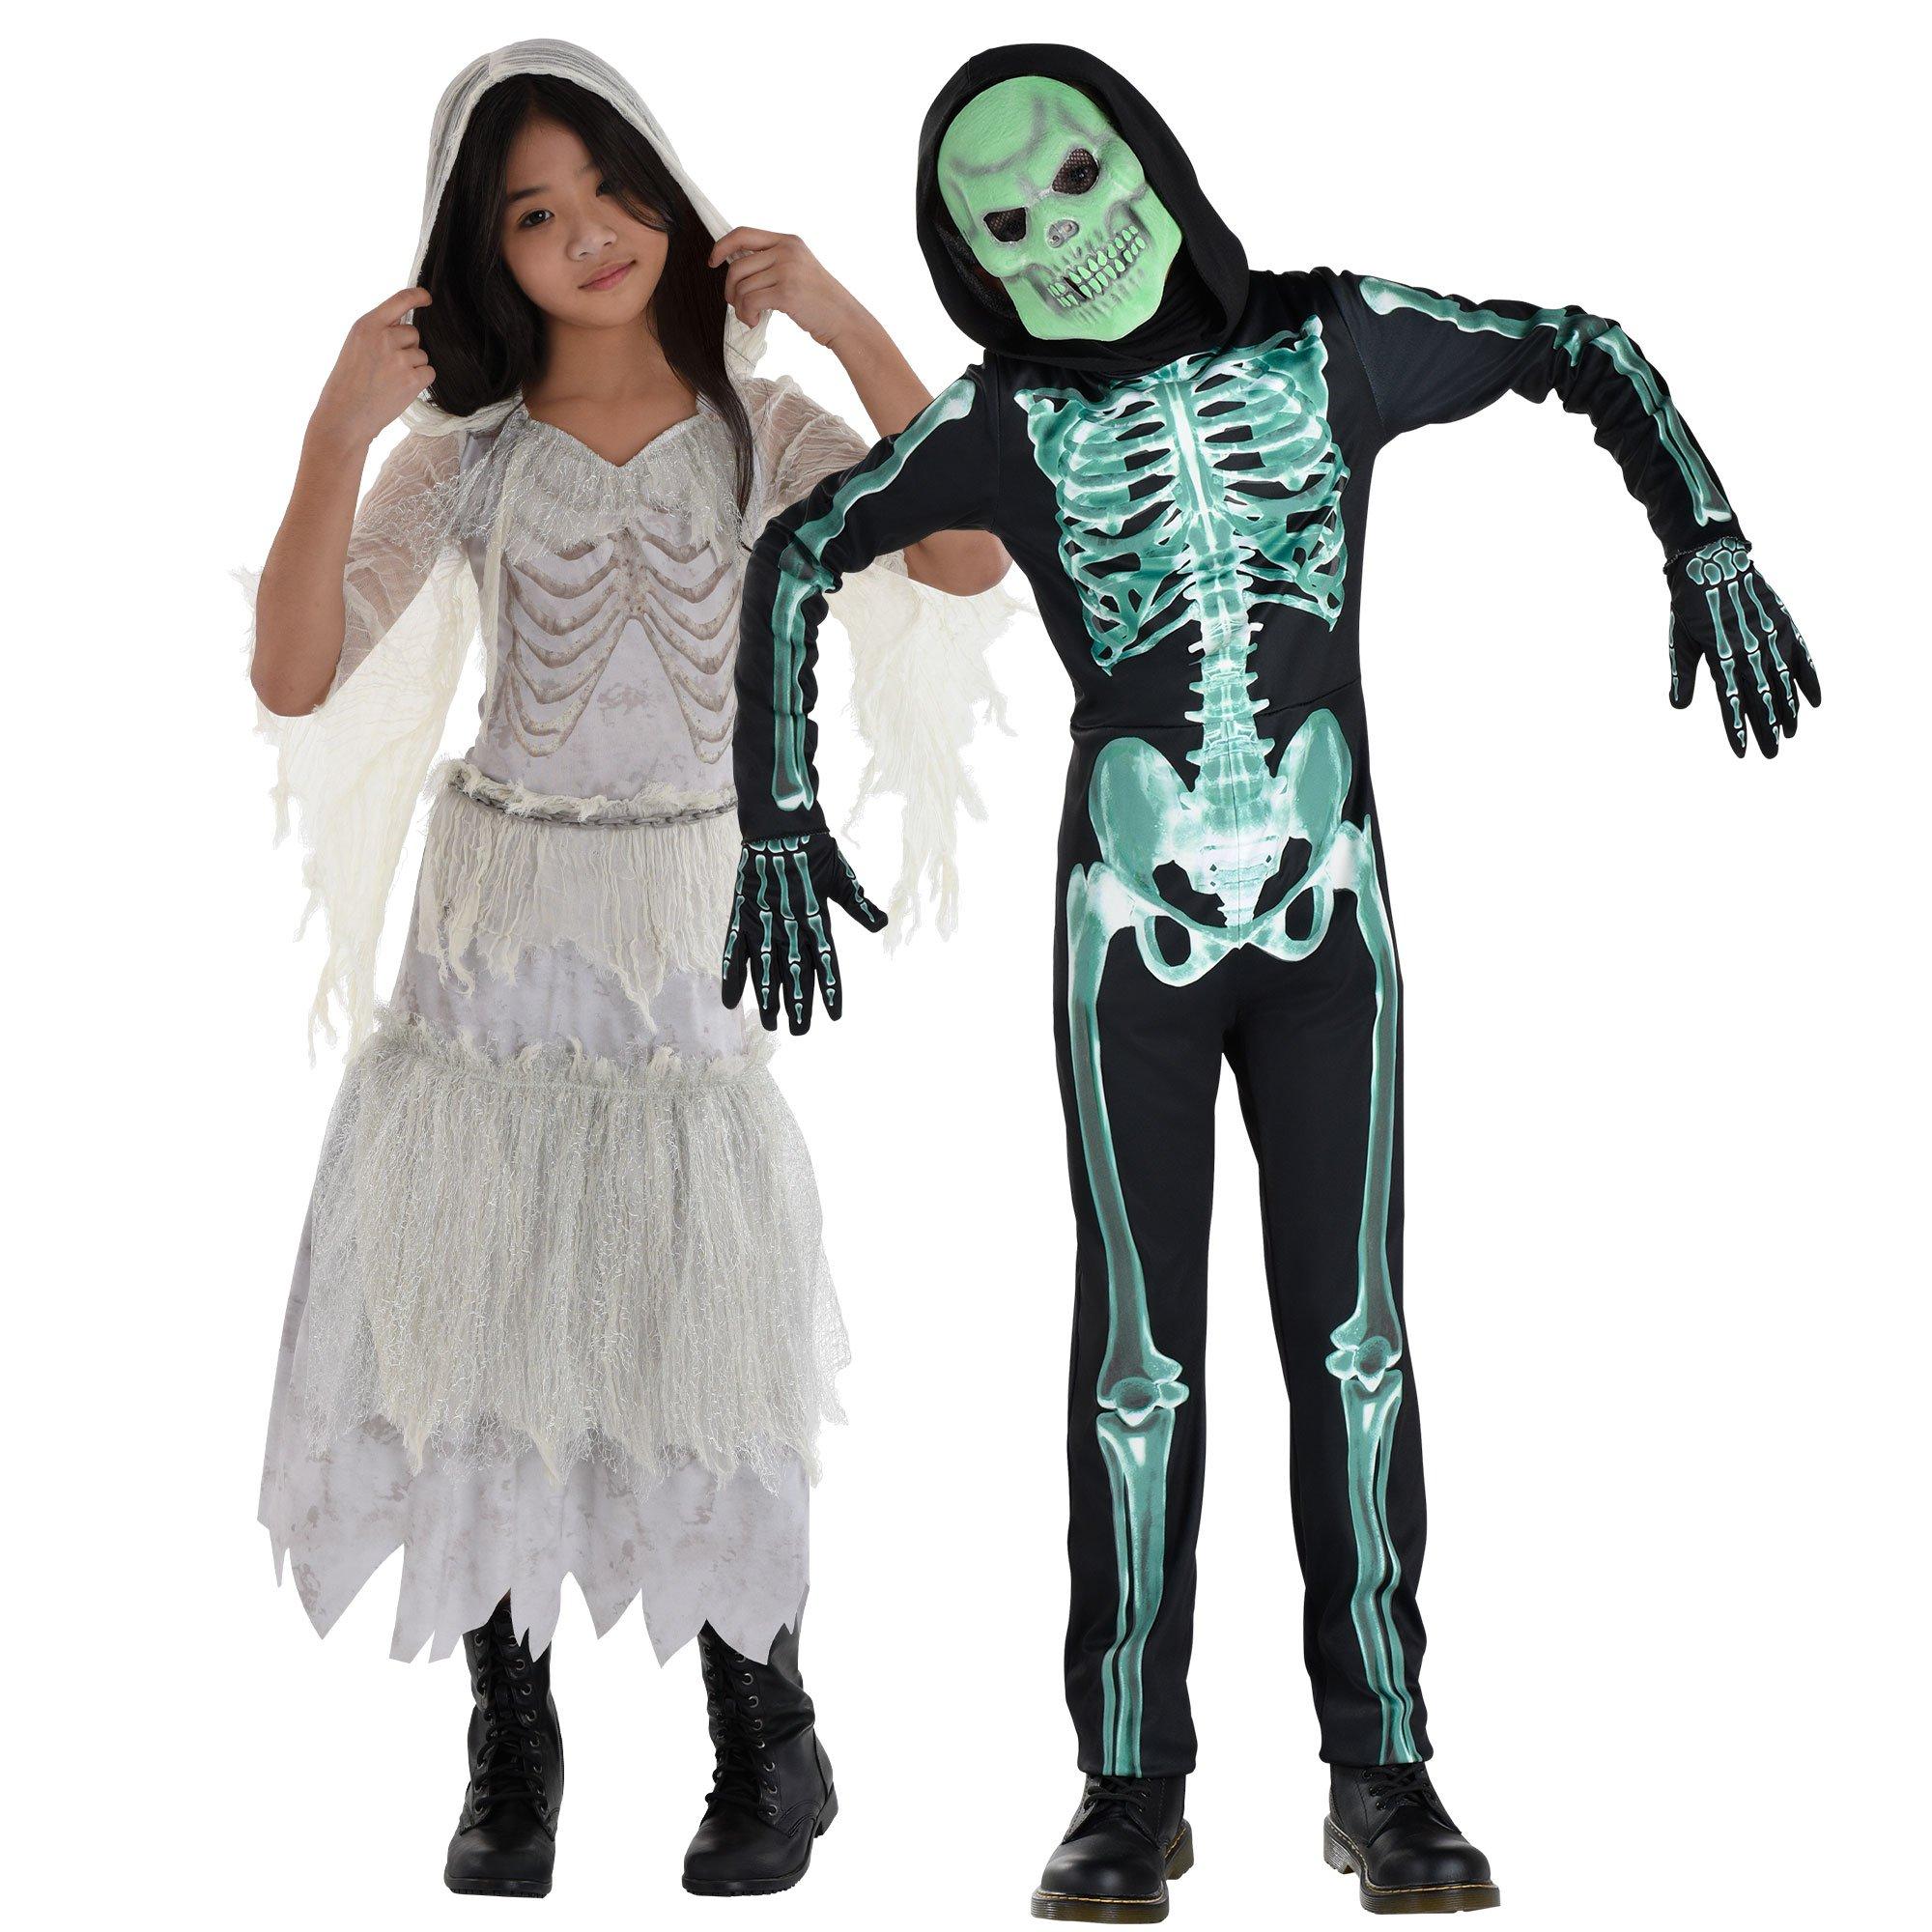 Black & Bone Family Costumes